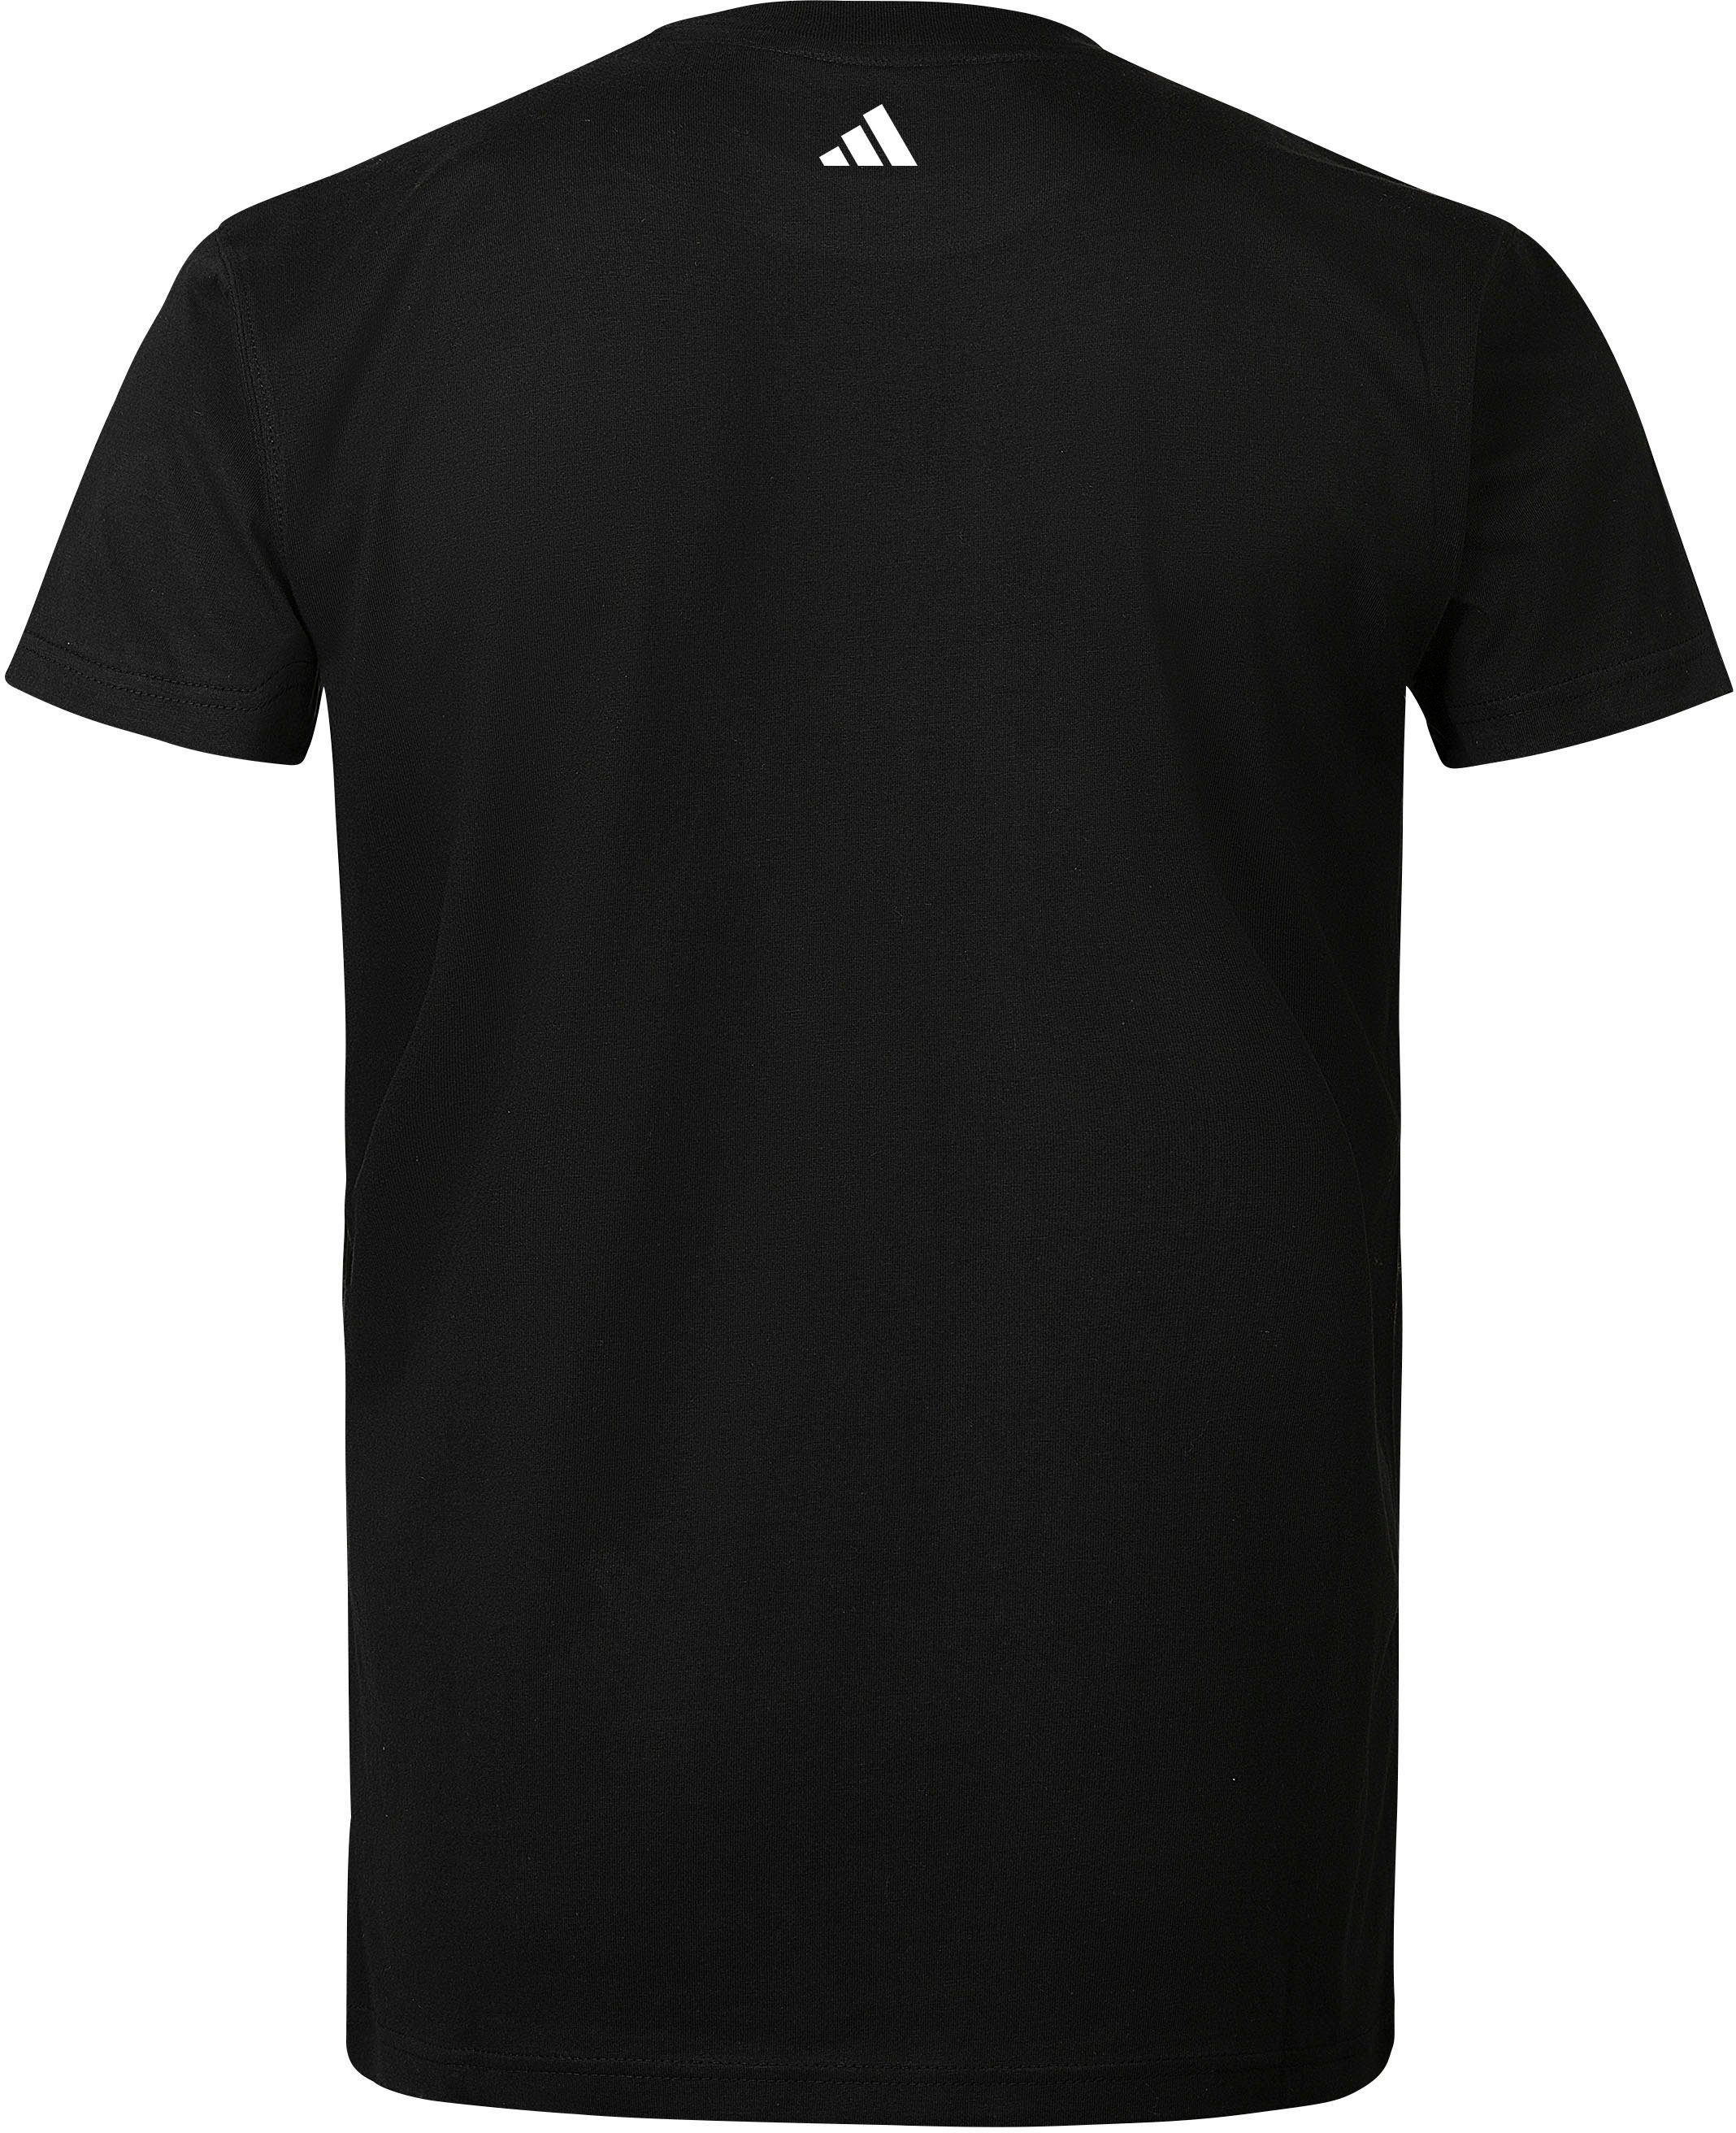 Community T-Shirt Boxing adidas T-Shirt Performance